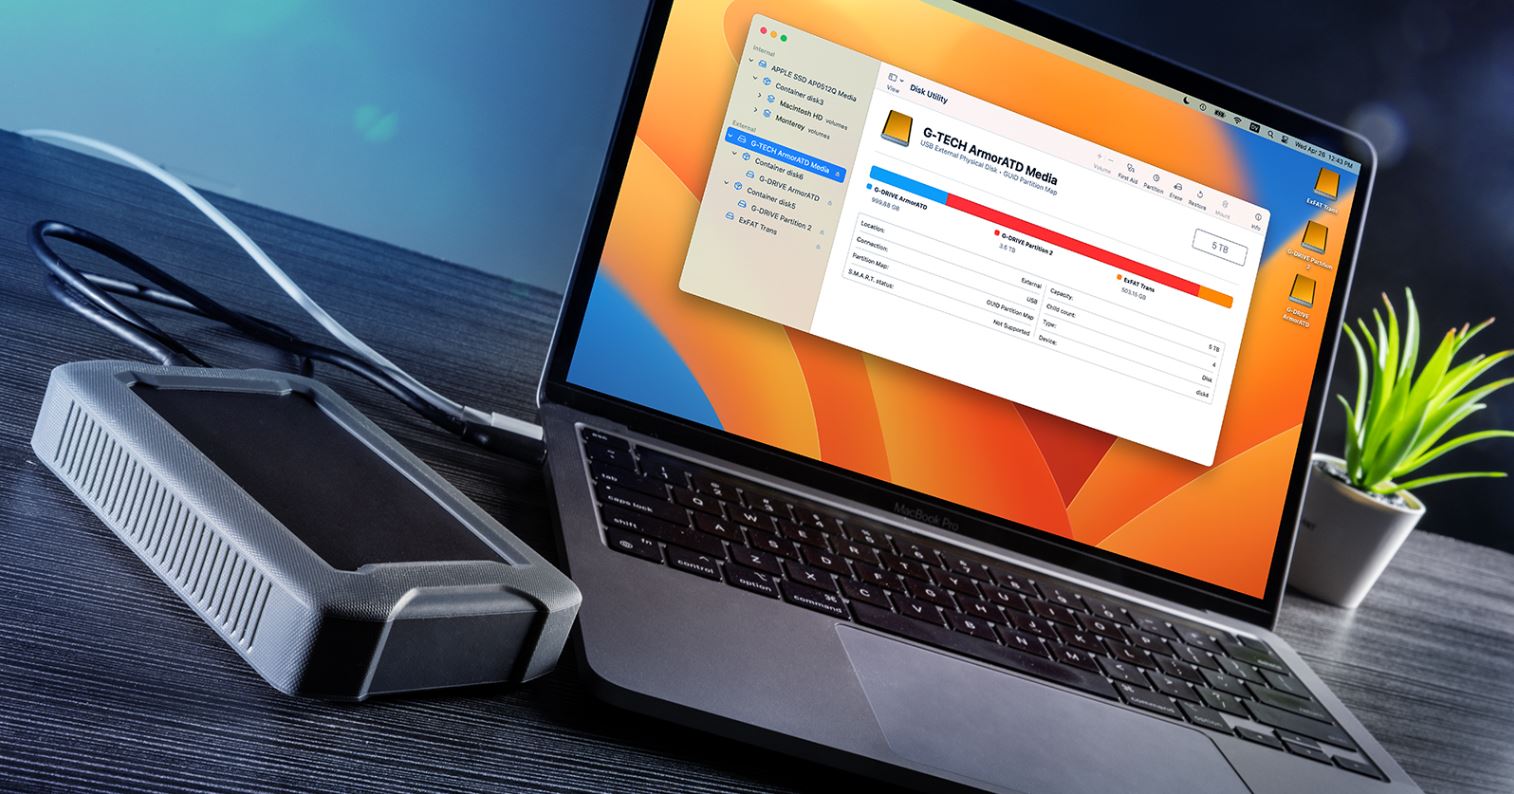 How To Create A Folder In External Hard Drive On Mac